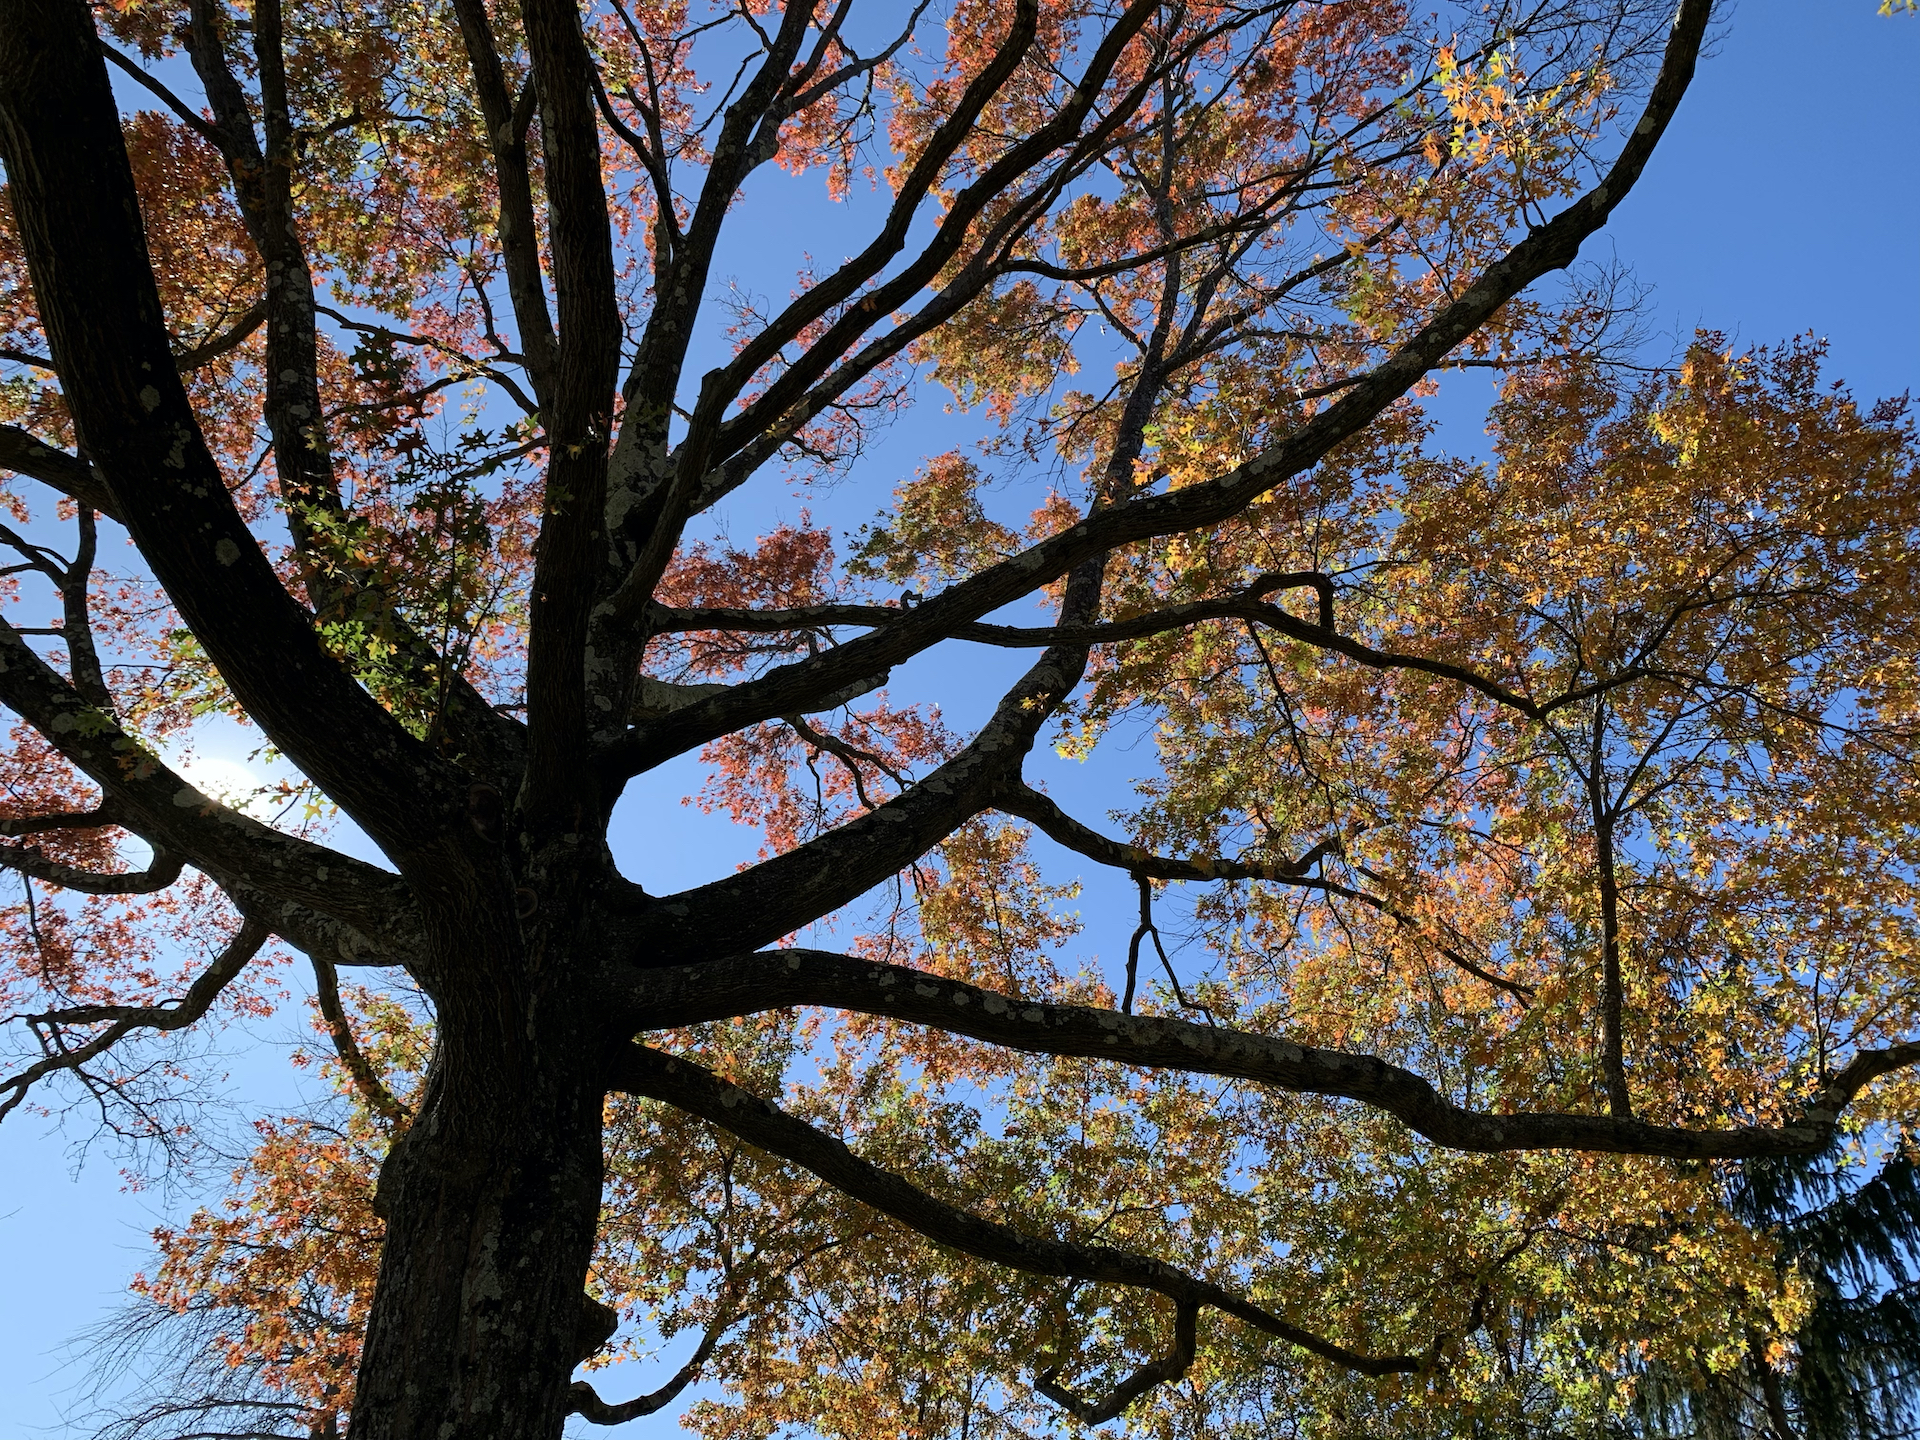 Autumn trees in Concord, MA